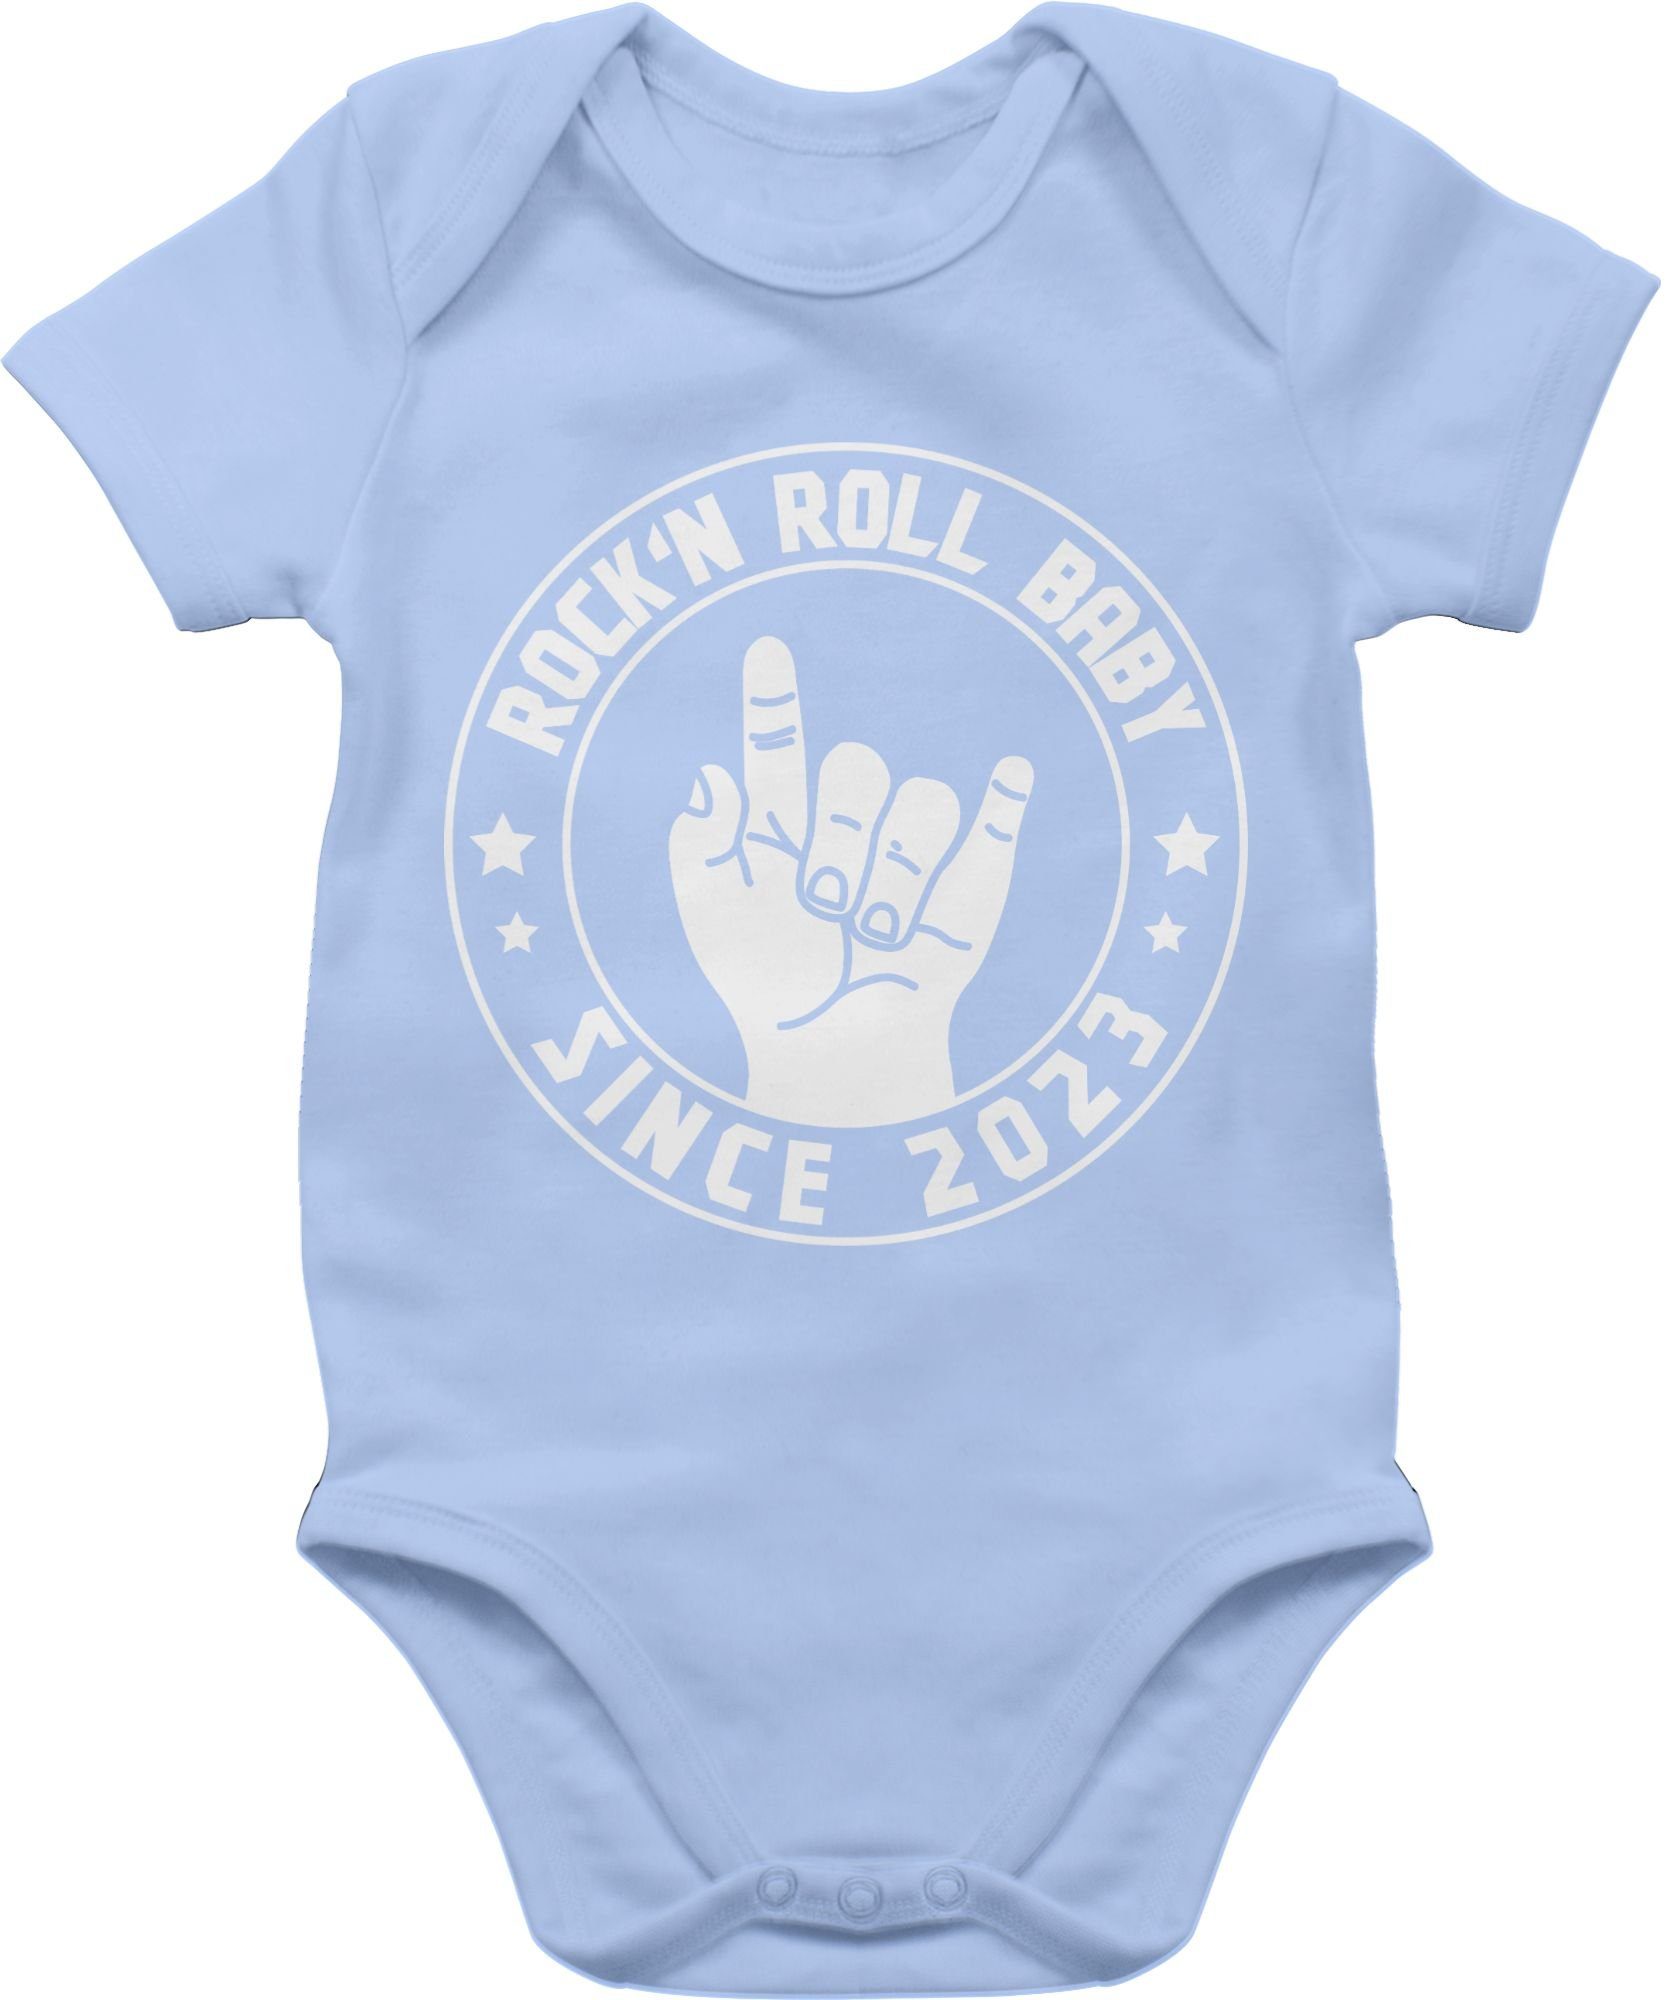 Shirtracer Shirtbody Rock'n Roll Baby since 2023 Sprüche Baby 3 Babyblau